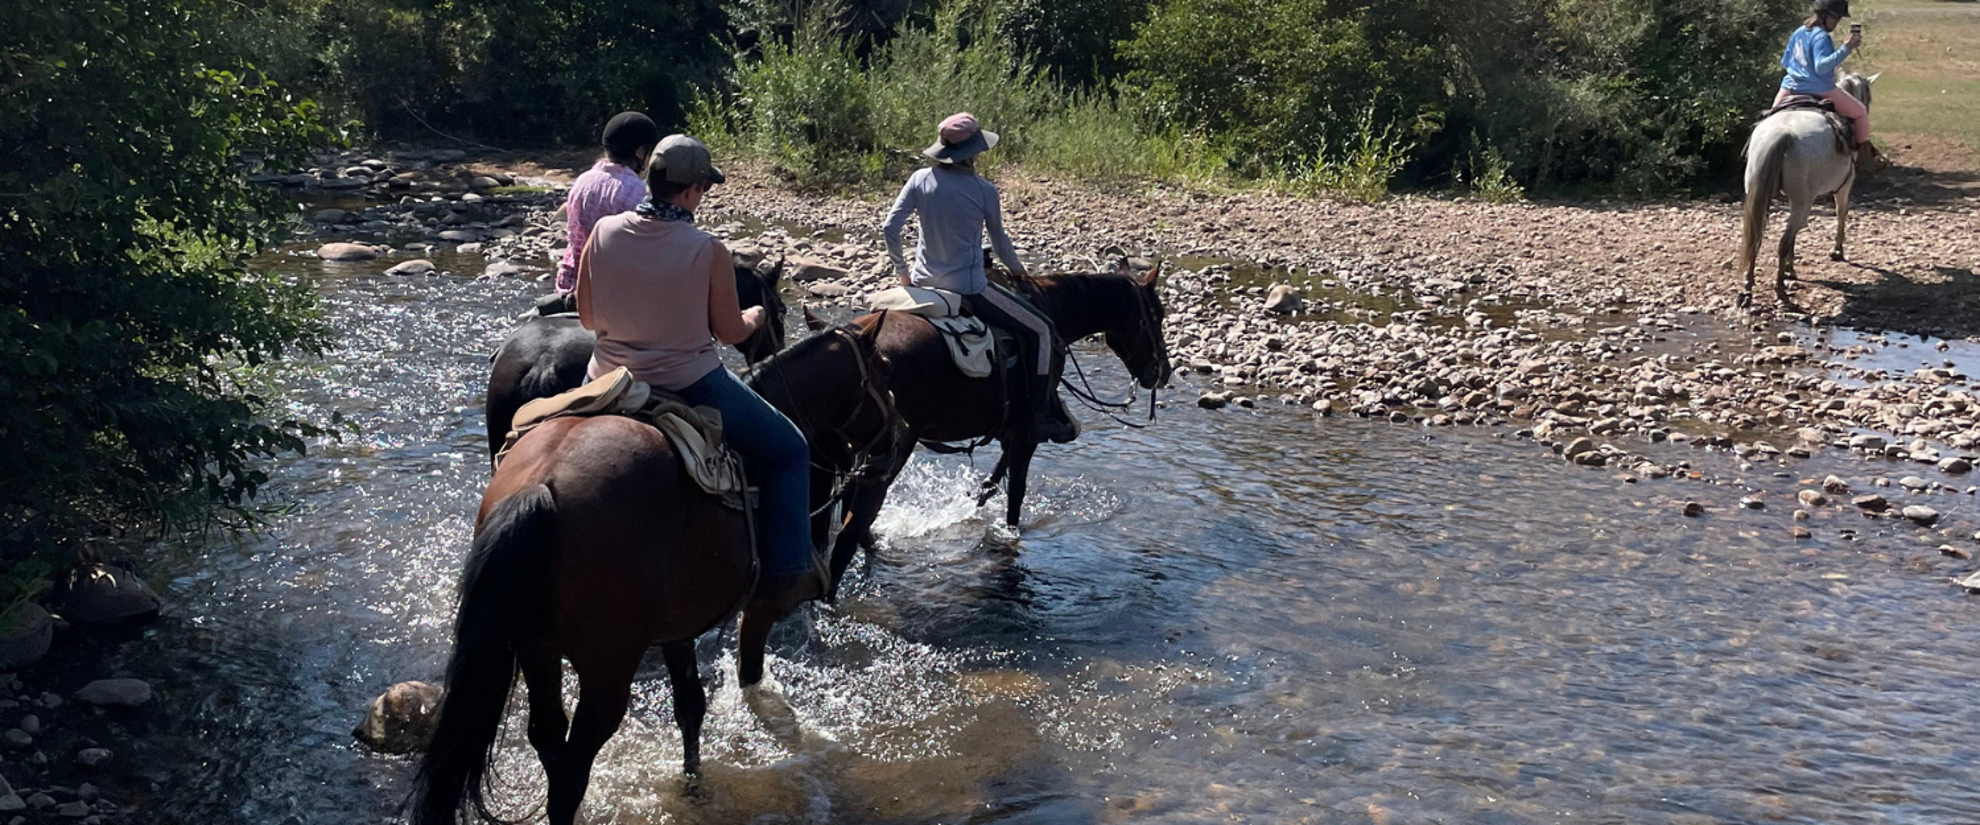 Living the Cowgirl Life | Laramie, Wyoming | Hiking, Horseback Riding, Dude Ranch